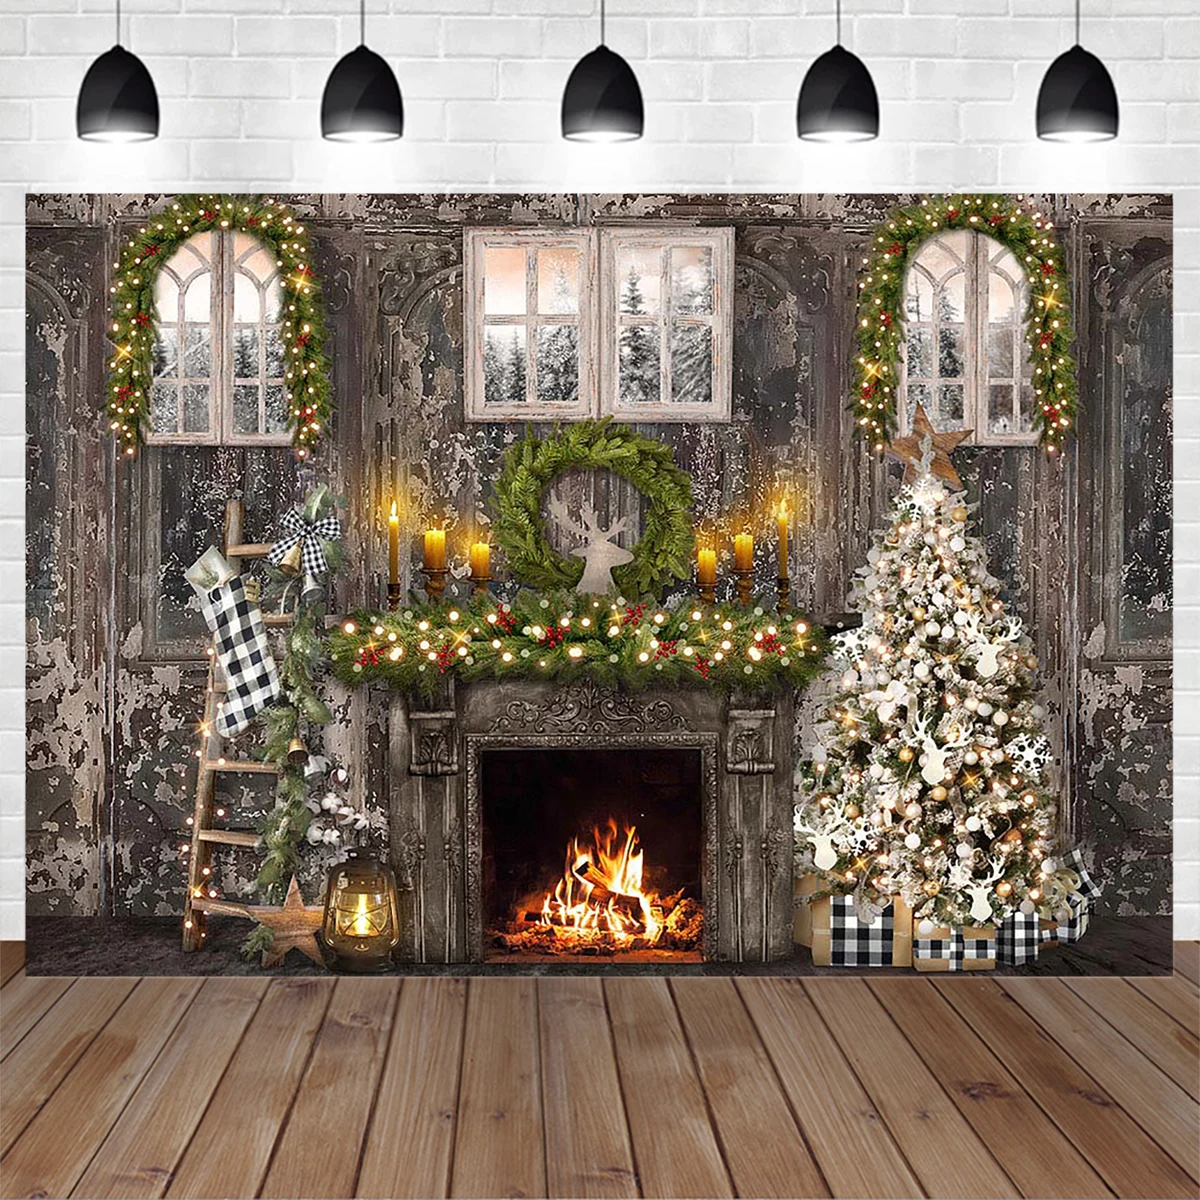 

Mocsicka Photography Background Reter Fireplace Brick Wall Christmas Decor Xmas Tree Gift Backdrop Baby Family Studio Portrait